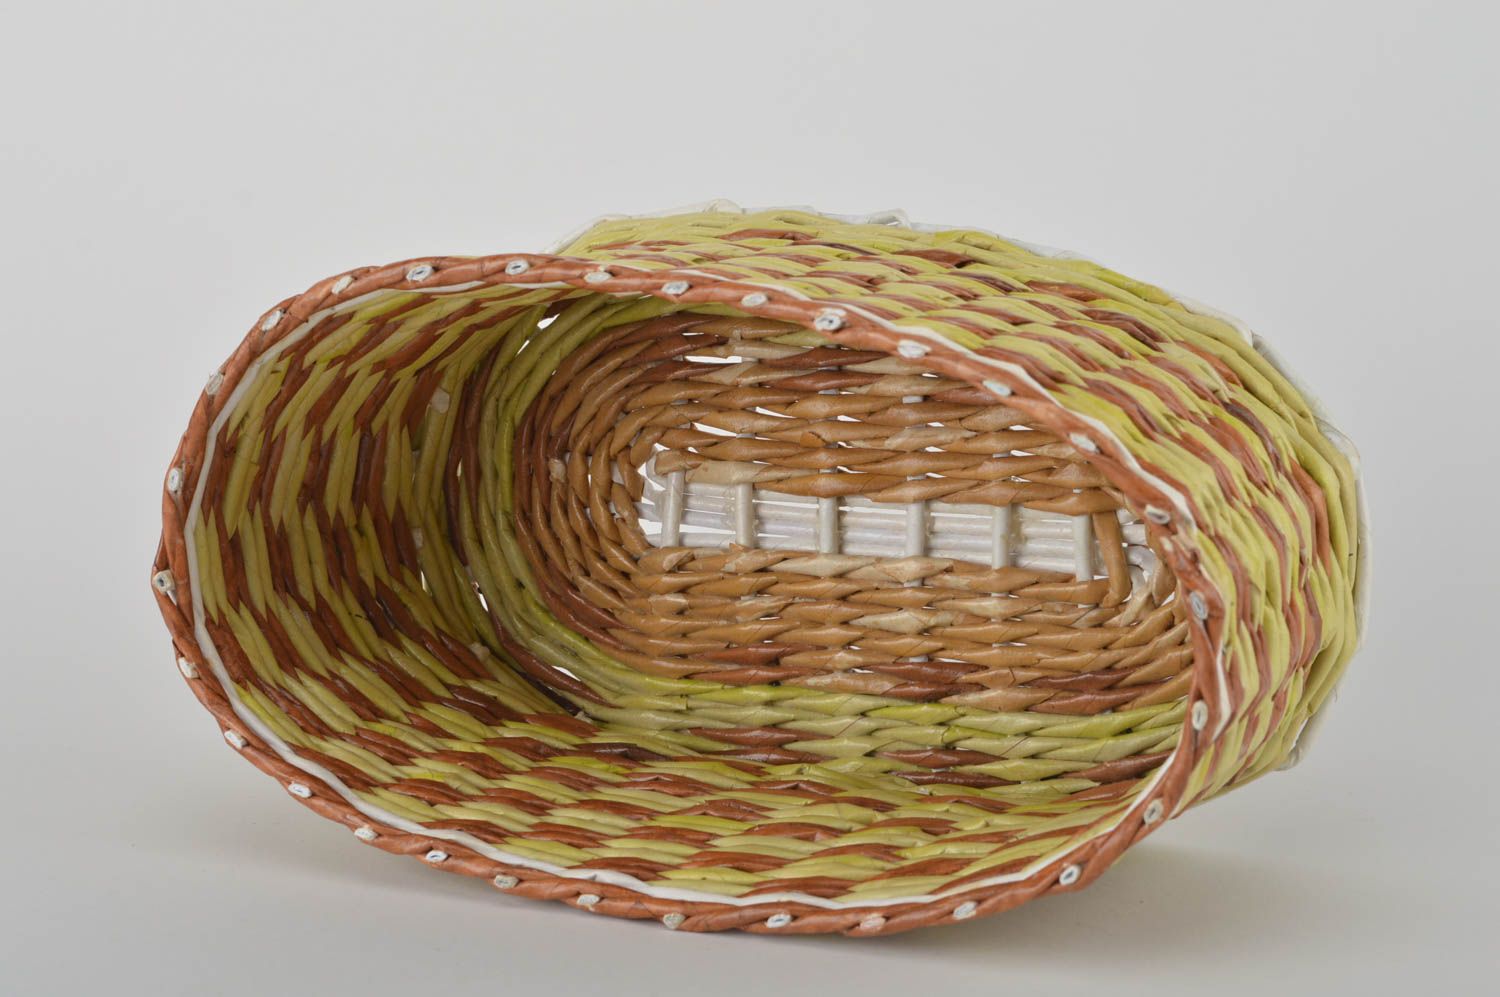 Unusual handmade woven basket homemade newspaper basket room decor ideas photo 4